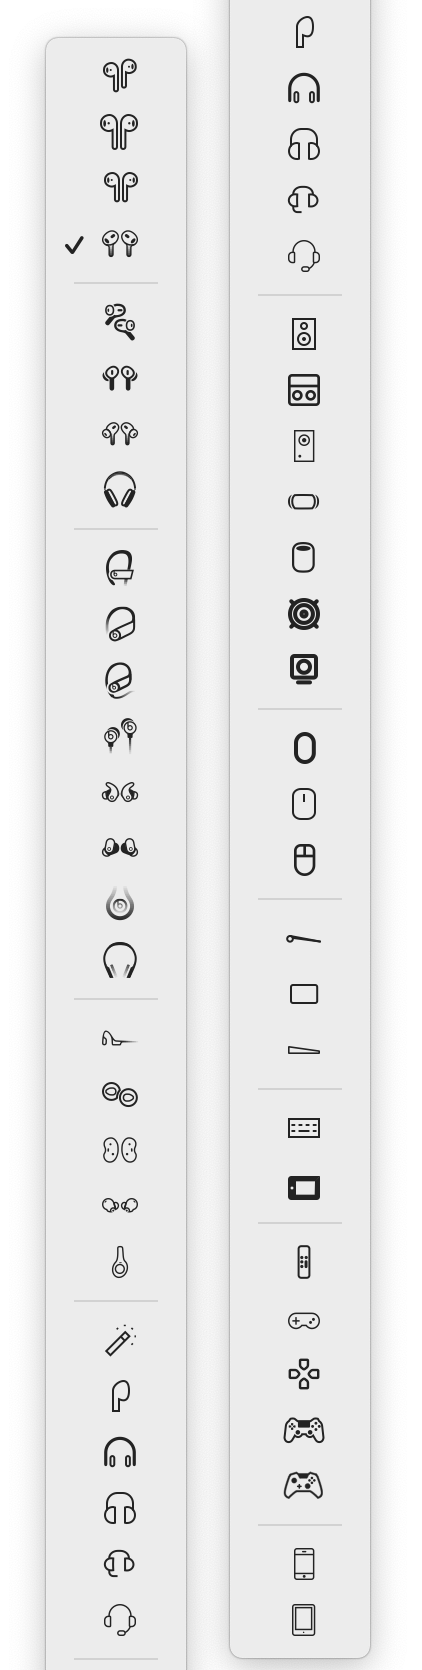 device icons